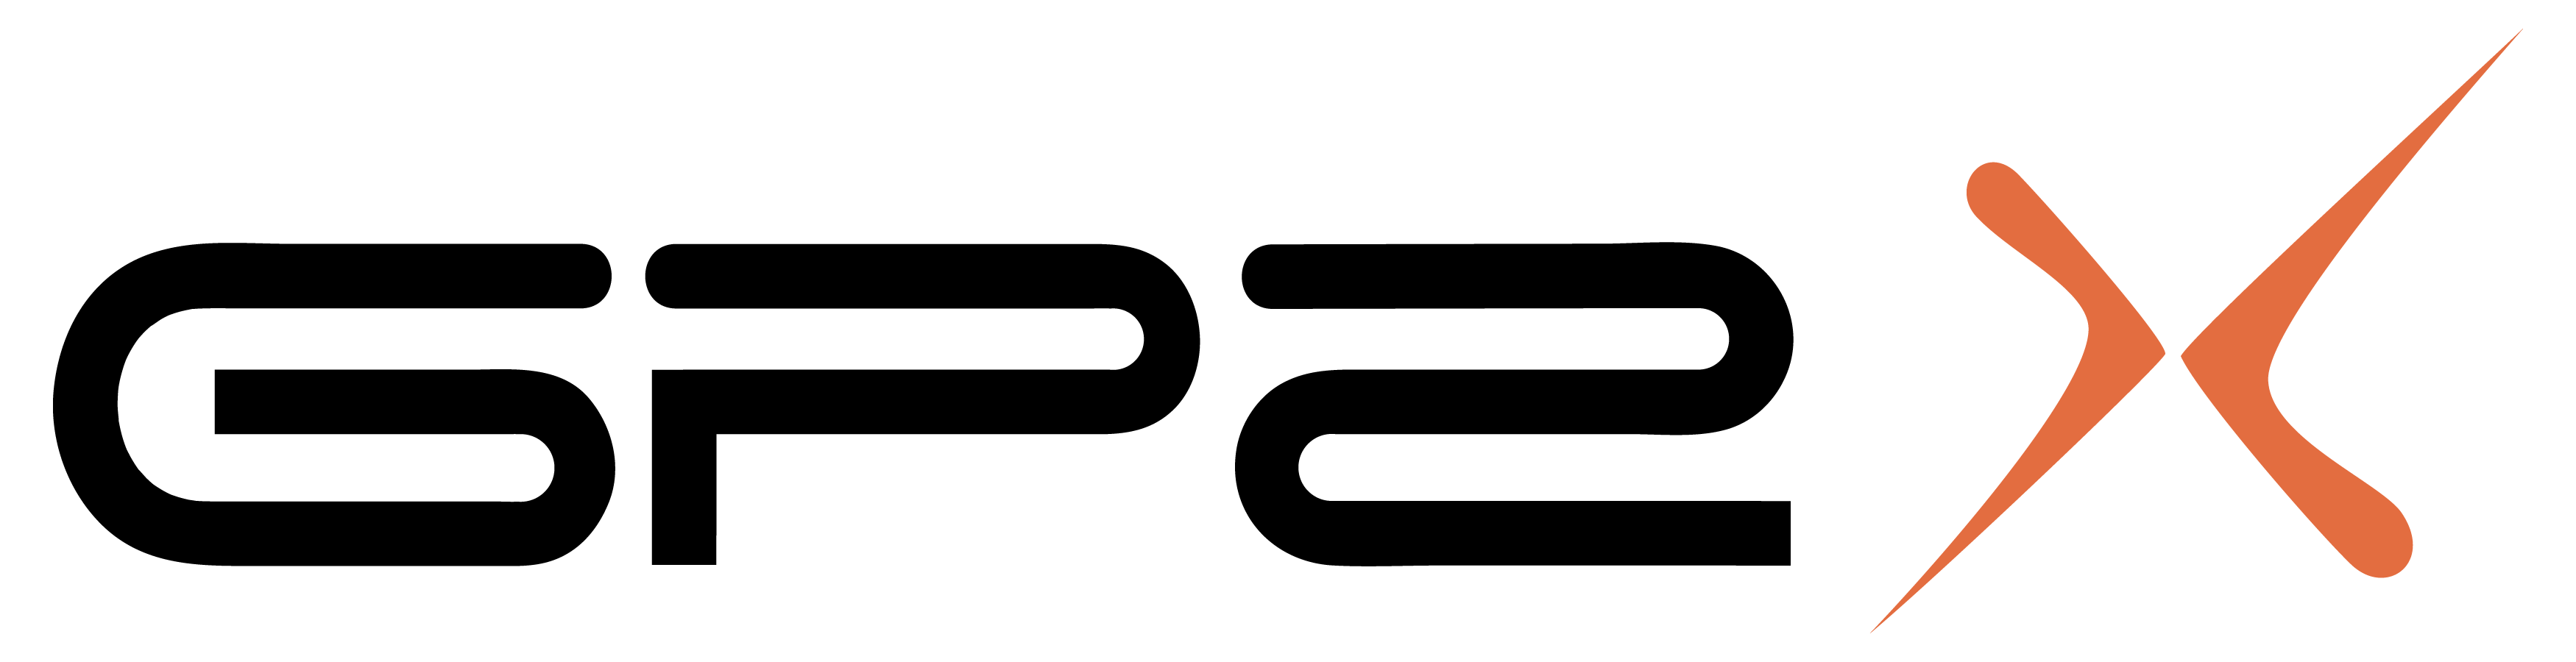 gp2x logo-0.png